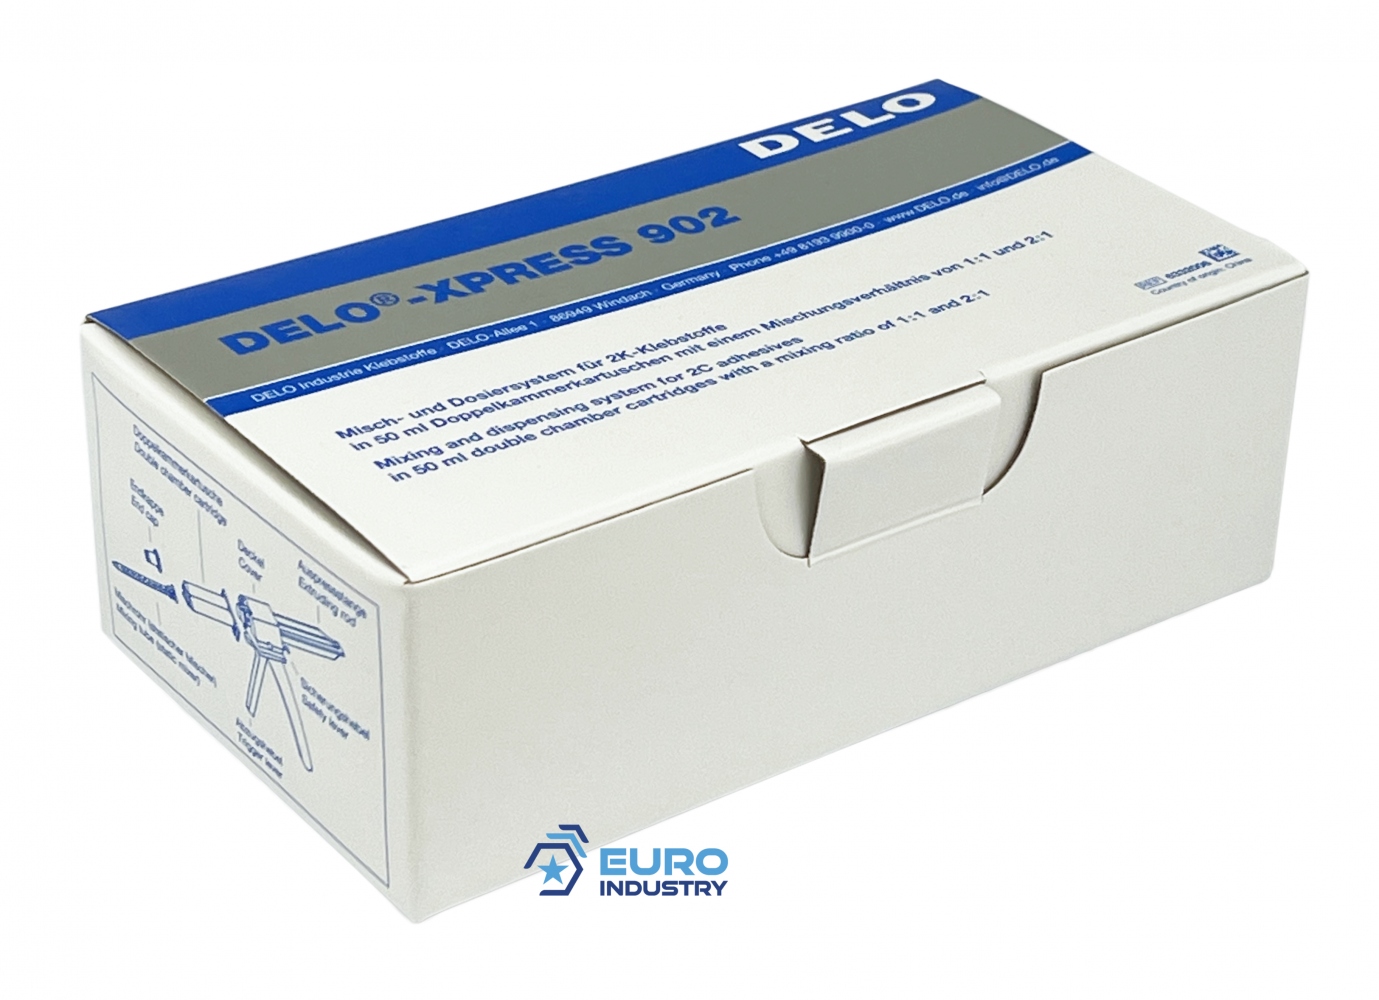 pics/DELO/delo-xpress-902-manual-dispensing-applicator-for-2c-cartridge-system-epoxy-glue-packaging-6332006-l.jpg